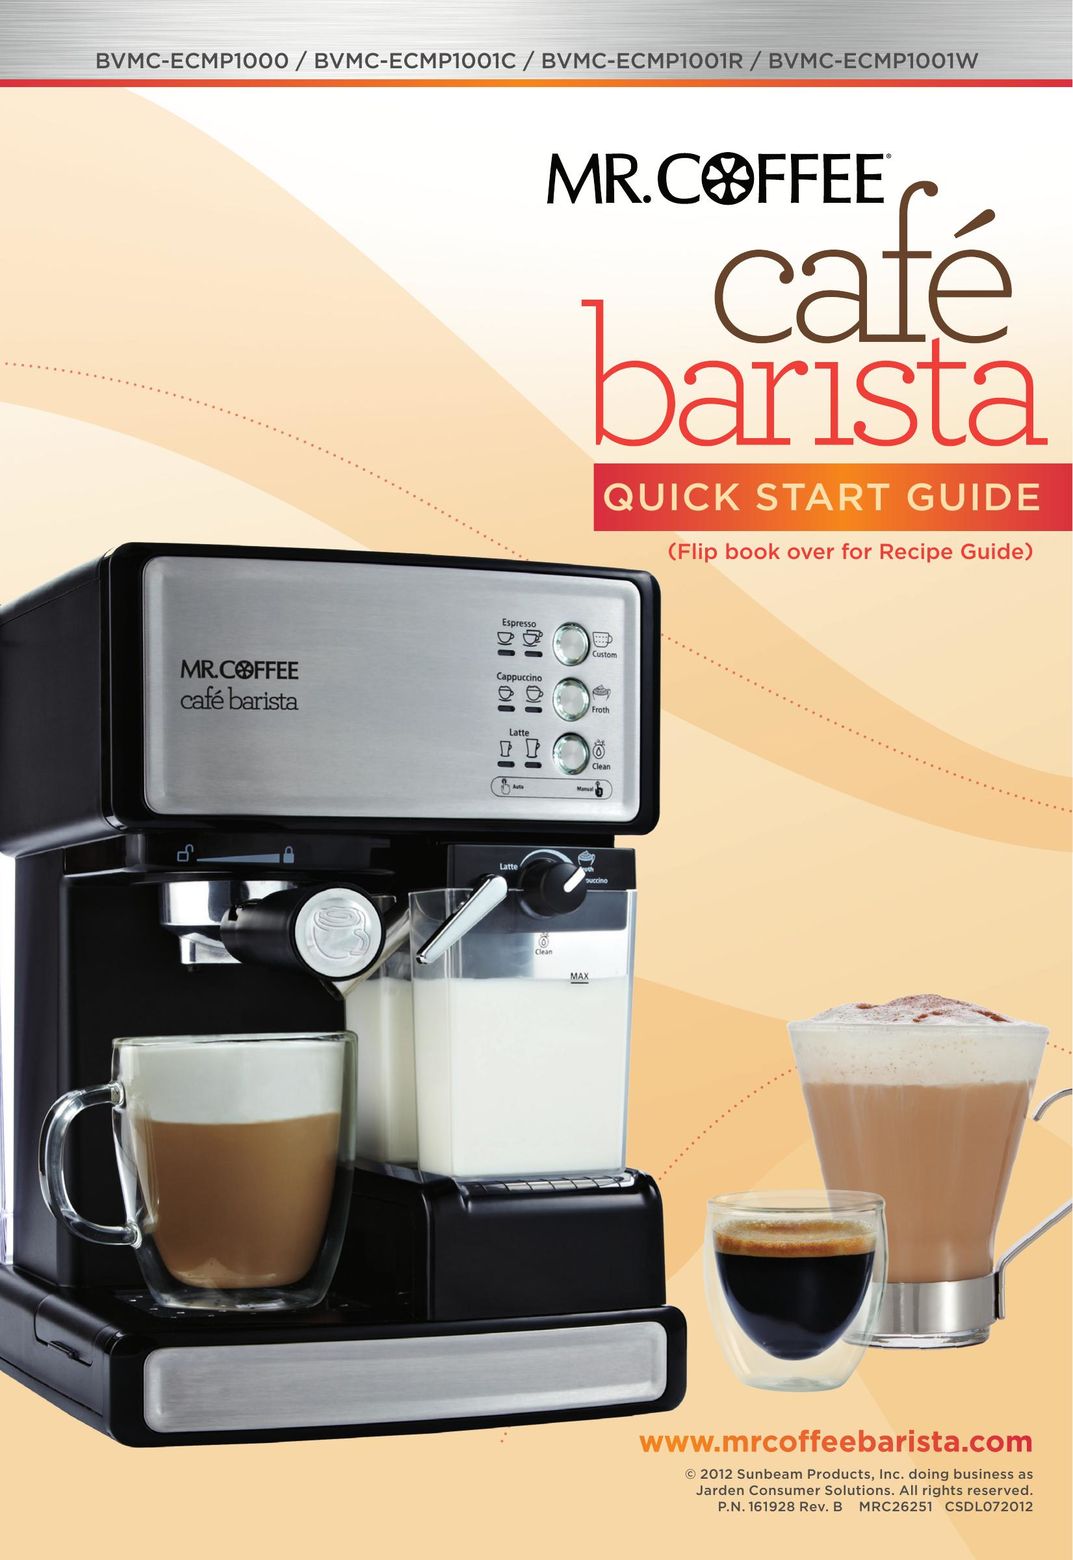 Mr. Coffee BVMC-ECMP1001R Coffeemaker User Manual